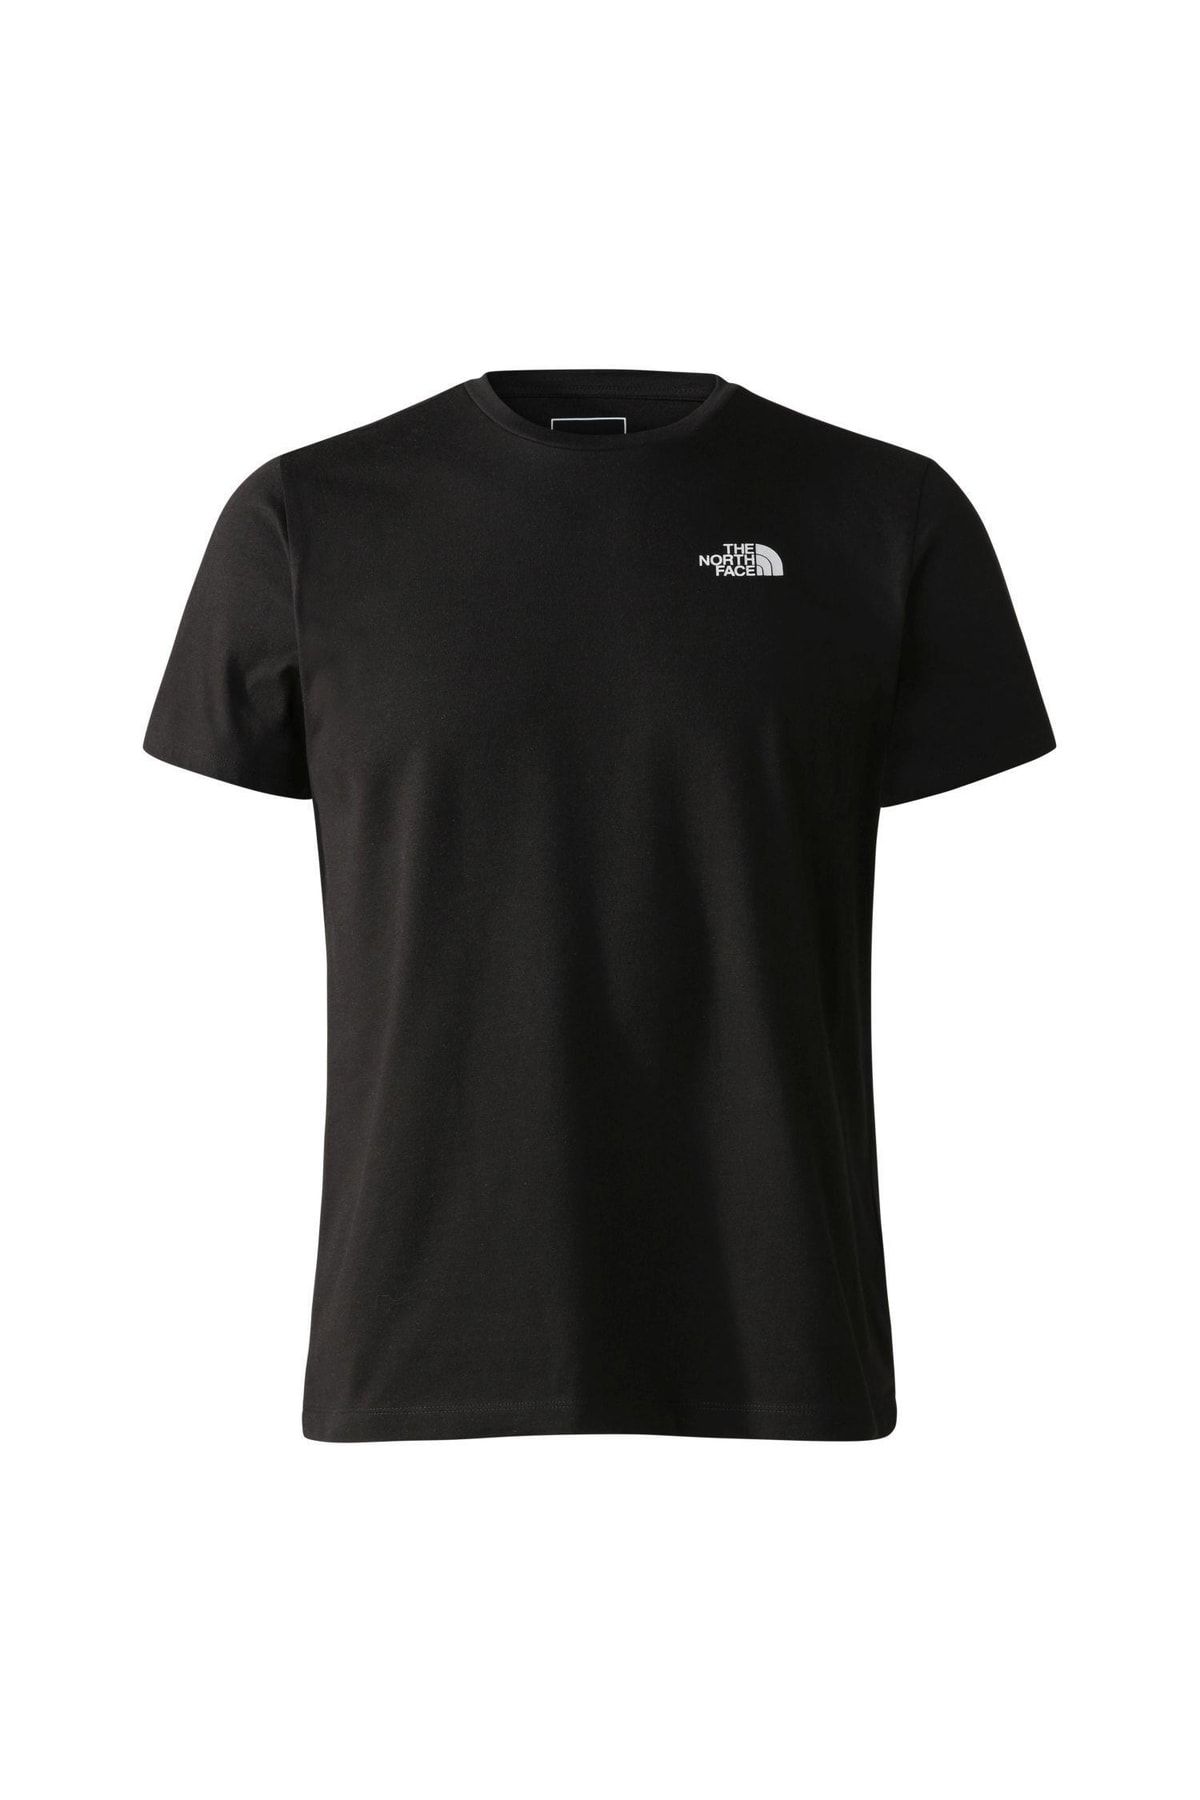 The North Face M Foundatıon Graphıc Tee S/s - Eu Erkek T-shirt Nf0a55efuv11